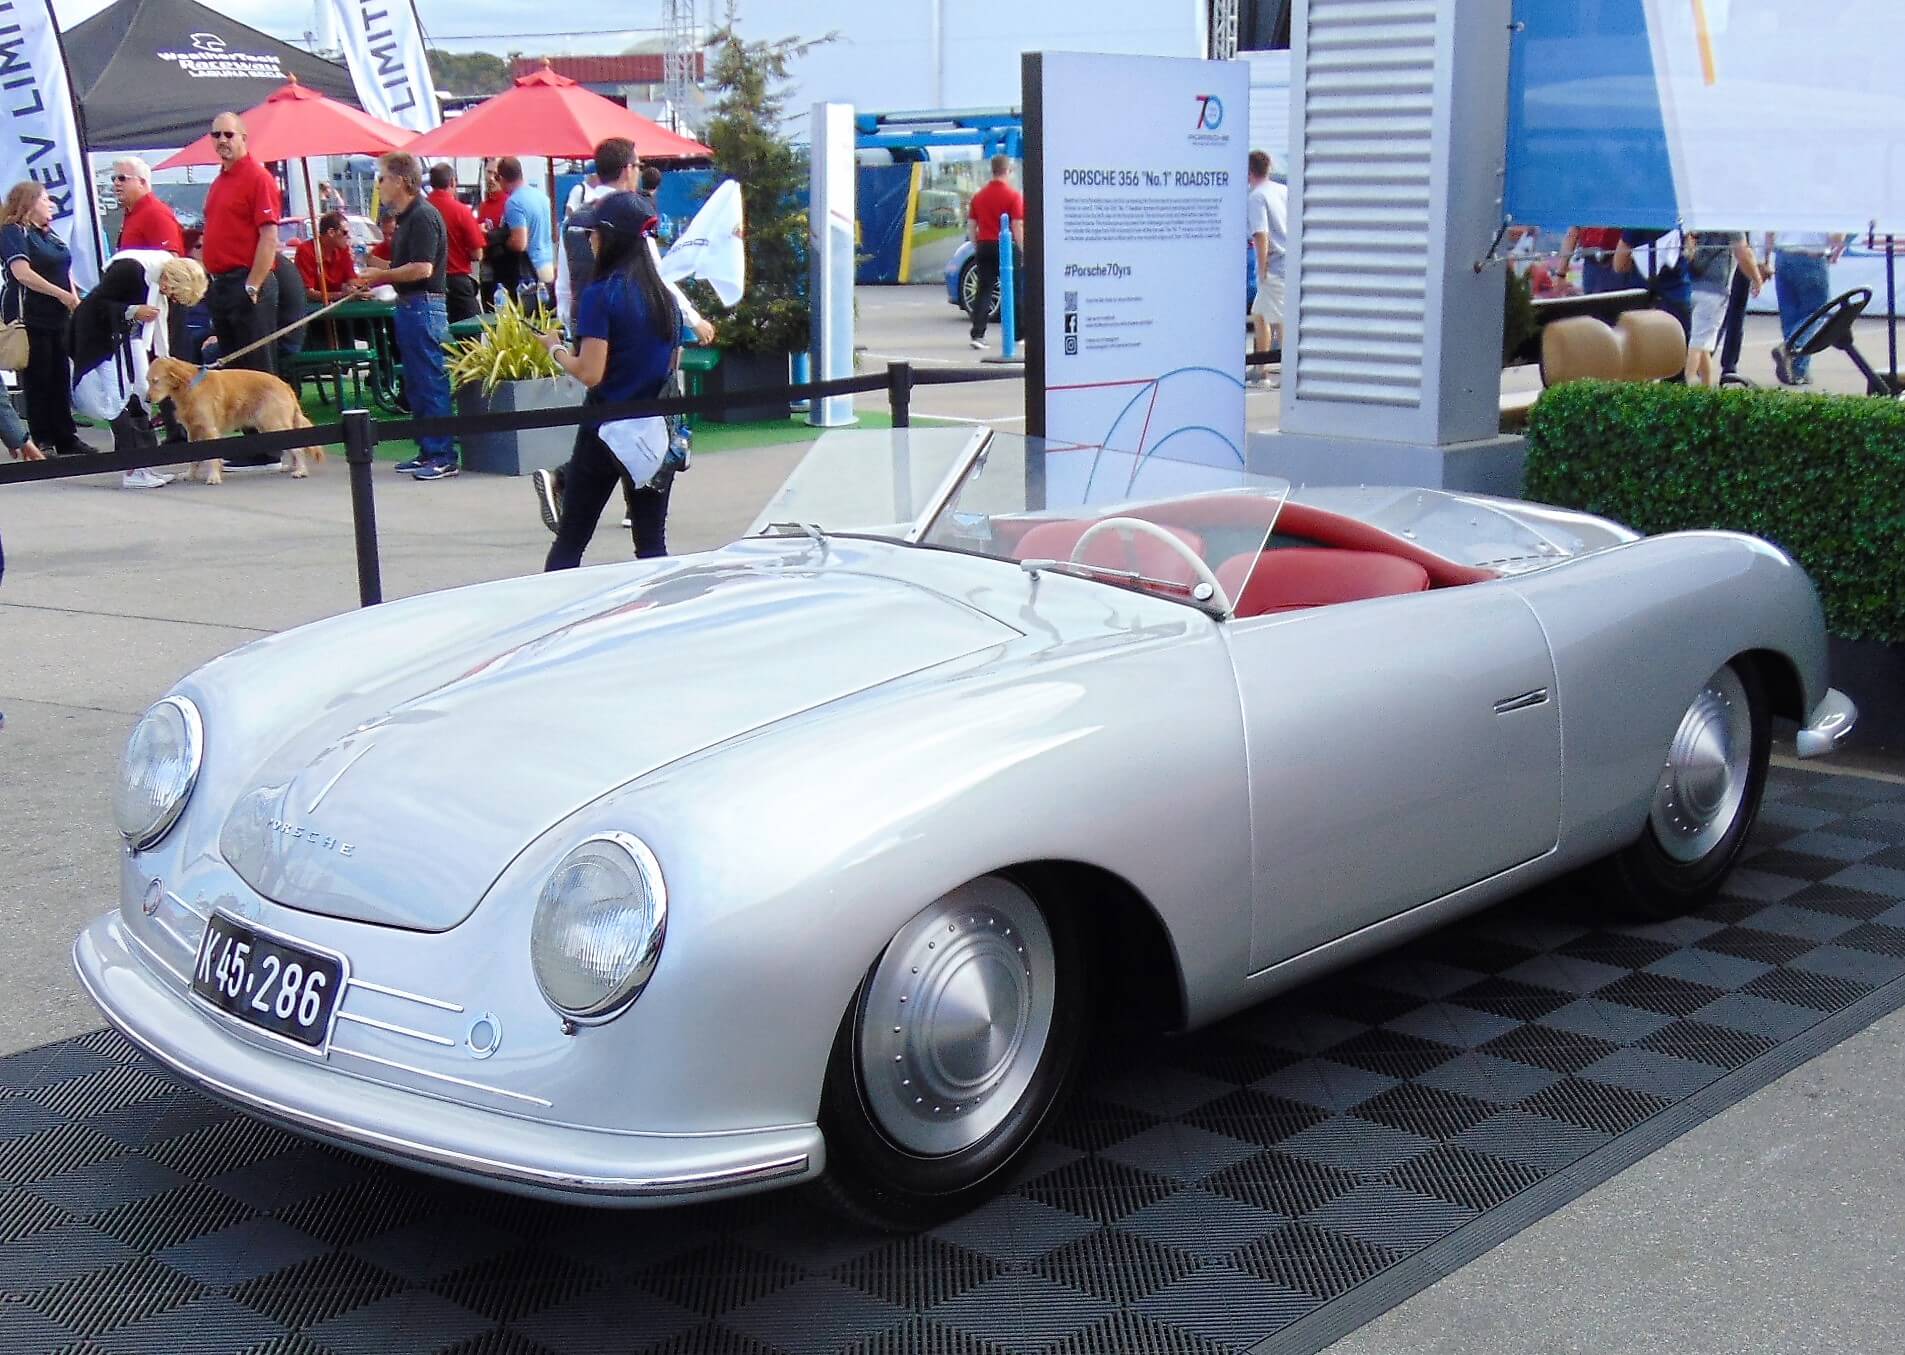 Porsche-356 “No. 1”-Roadster replica